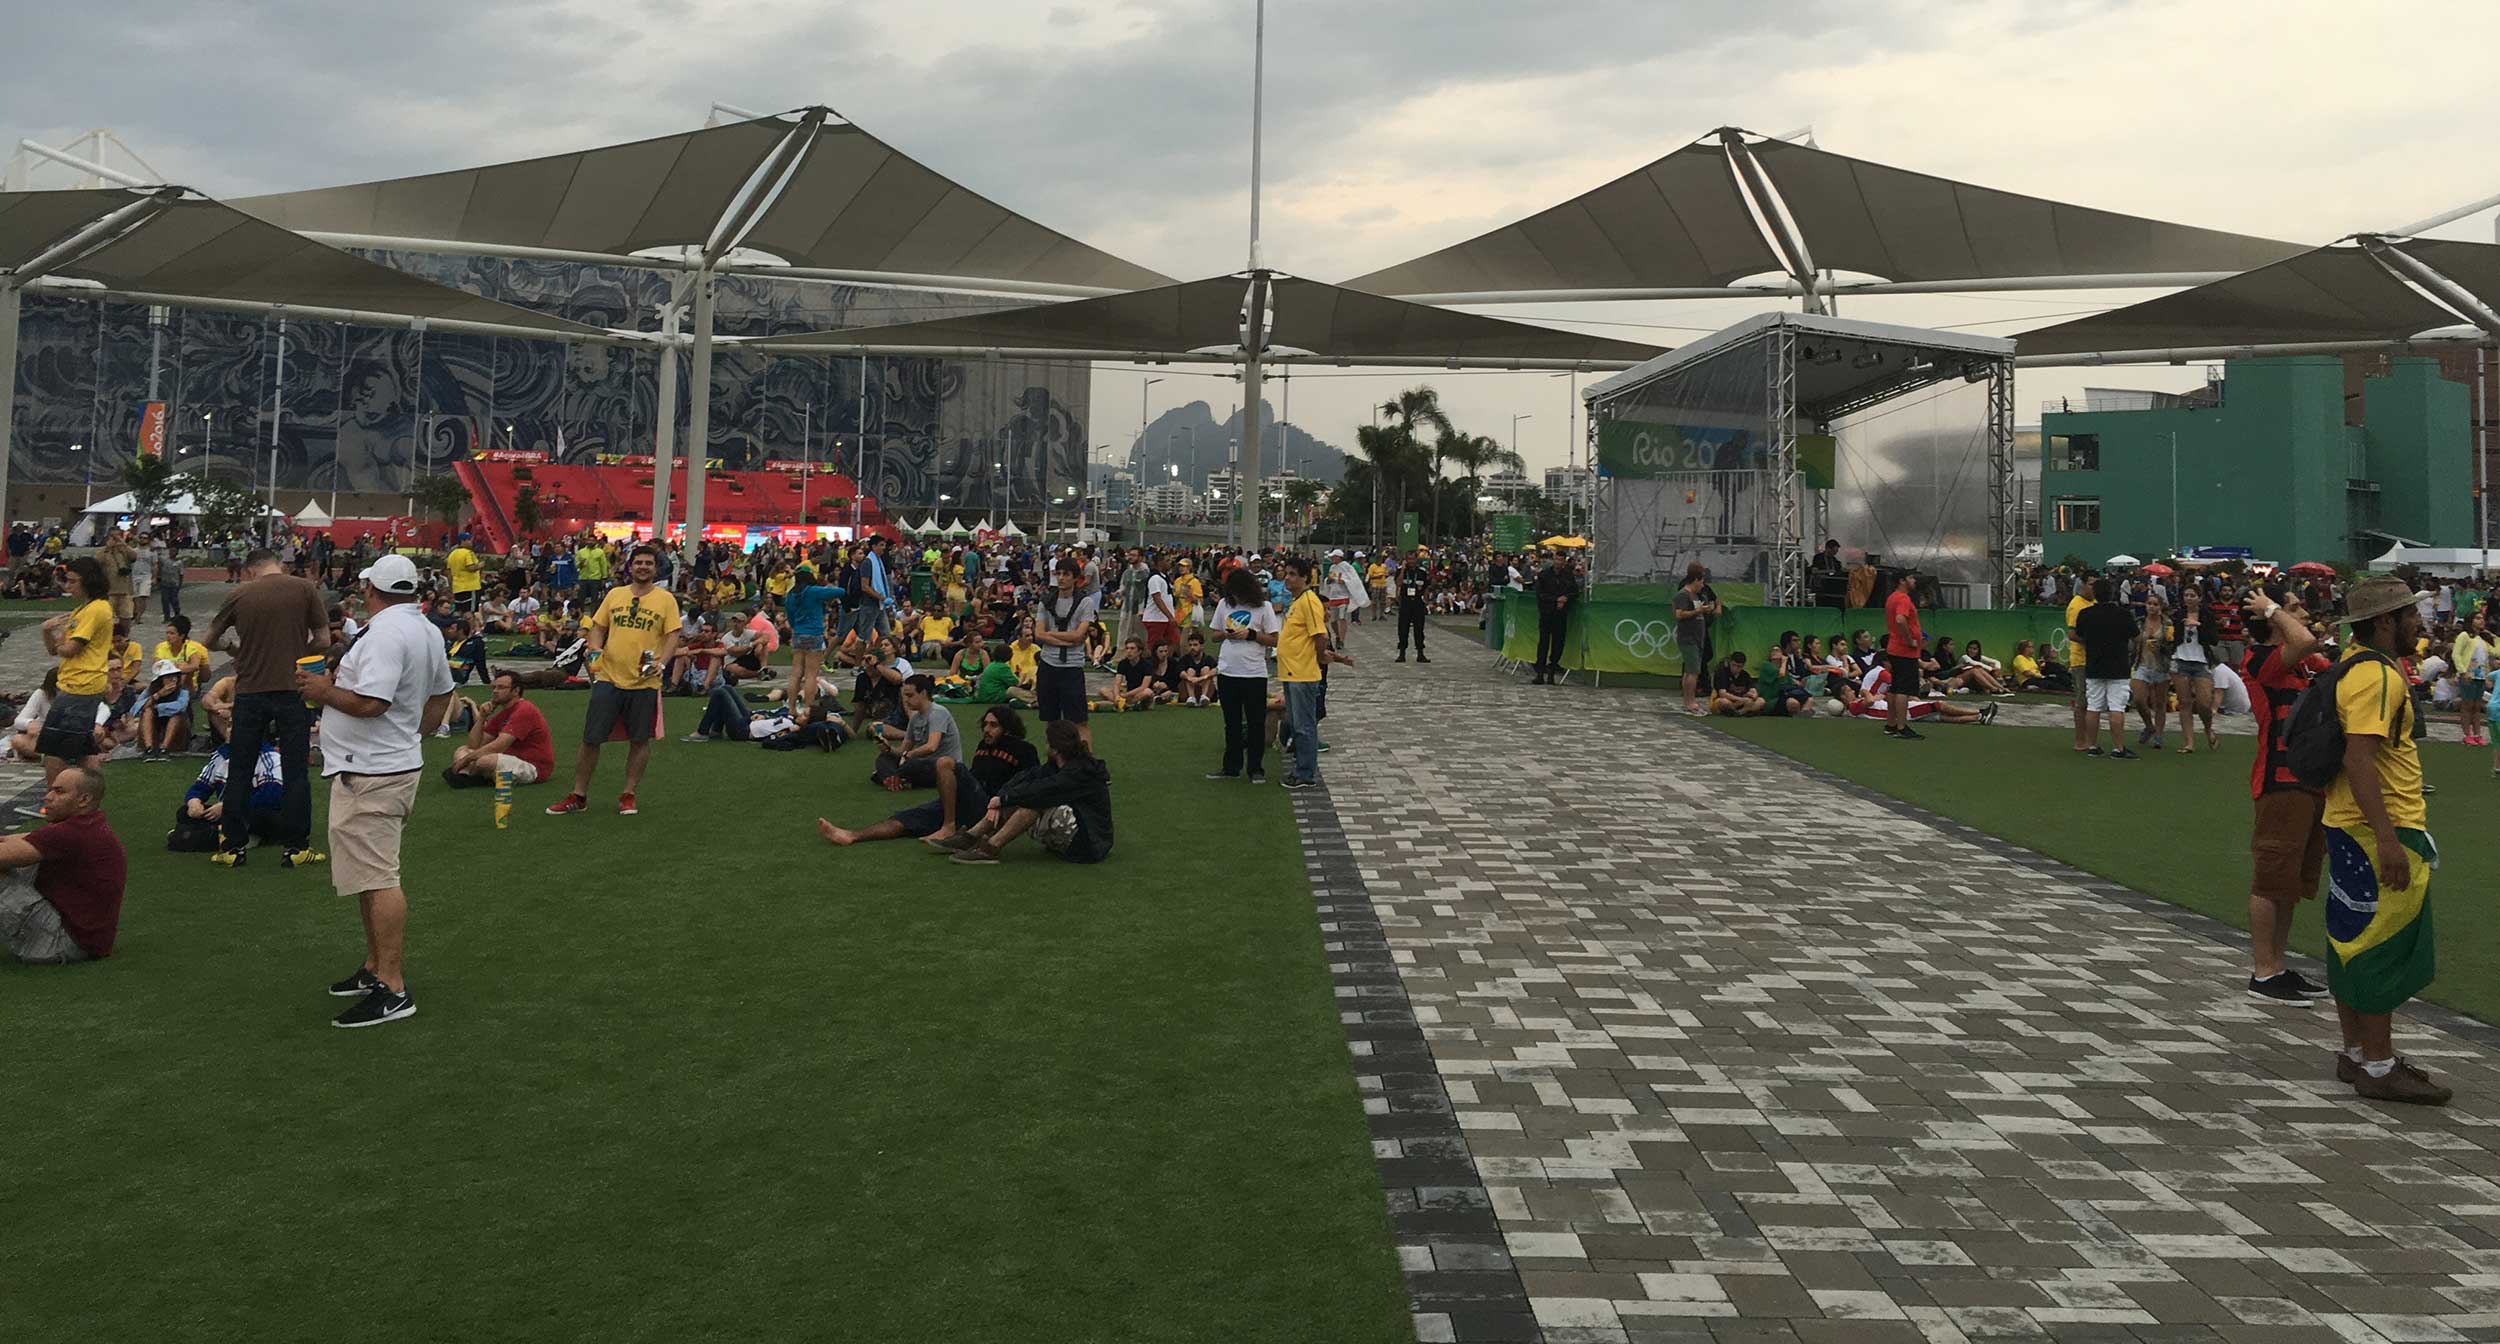 Brazilian fans mill about in the Olympic Park in Rio de Janeiro, Brazil before the men's soccer final